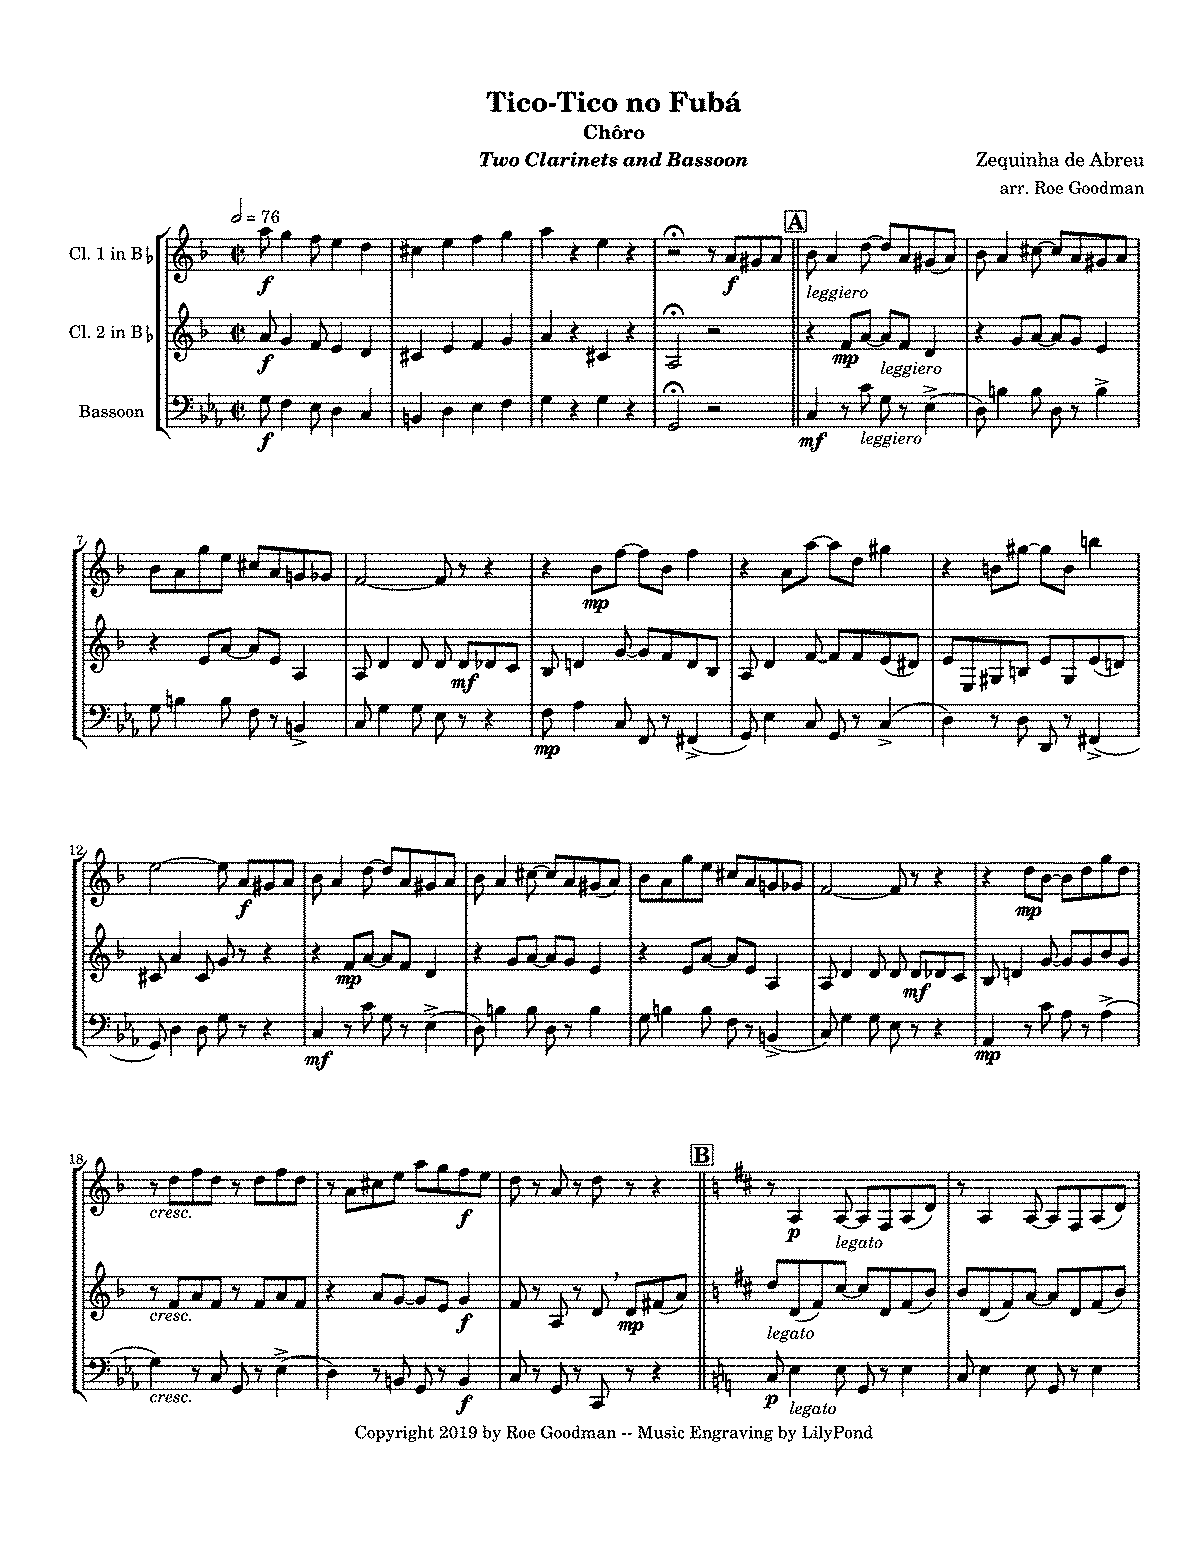 tico tico no fuba piano sheet music pdf for free